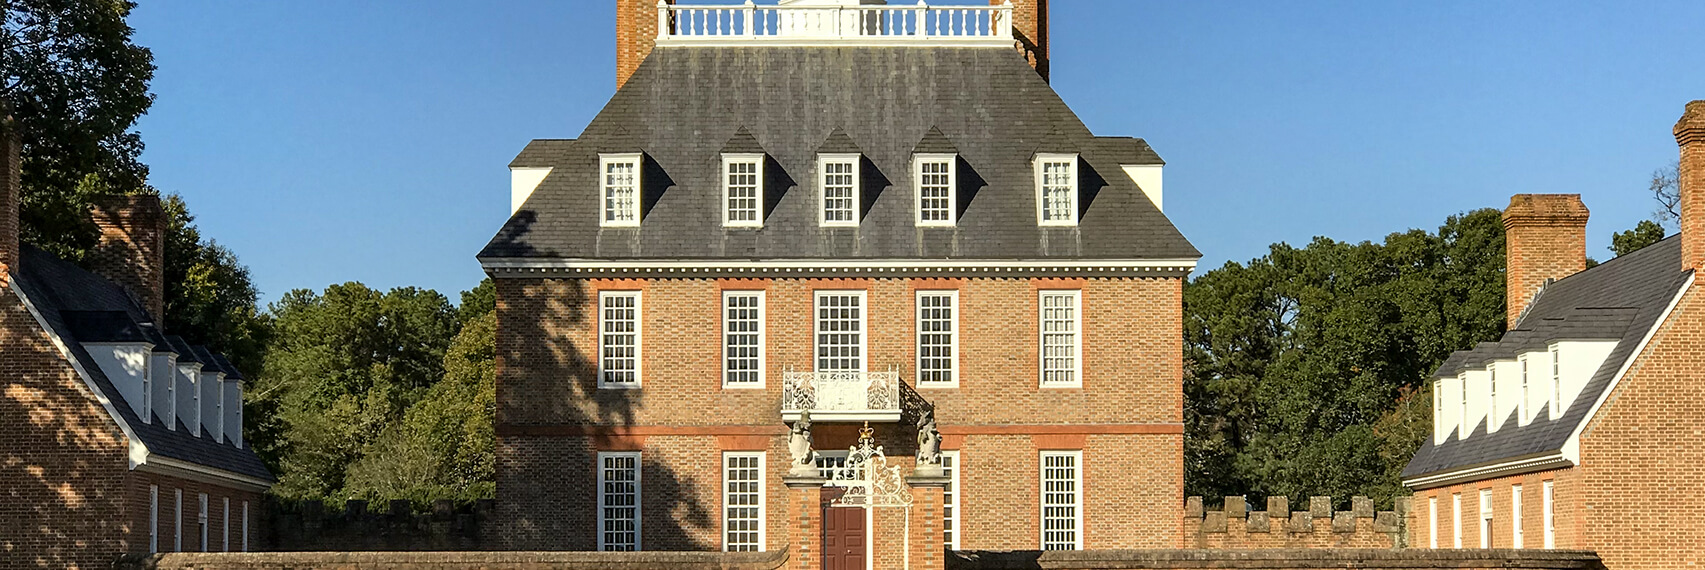 Colonial Williamsburg Palace